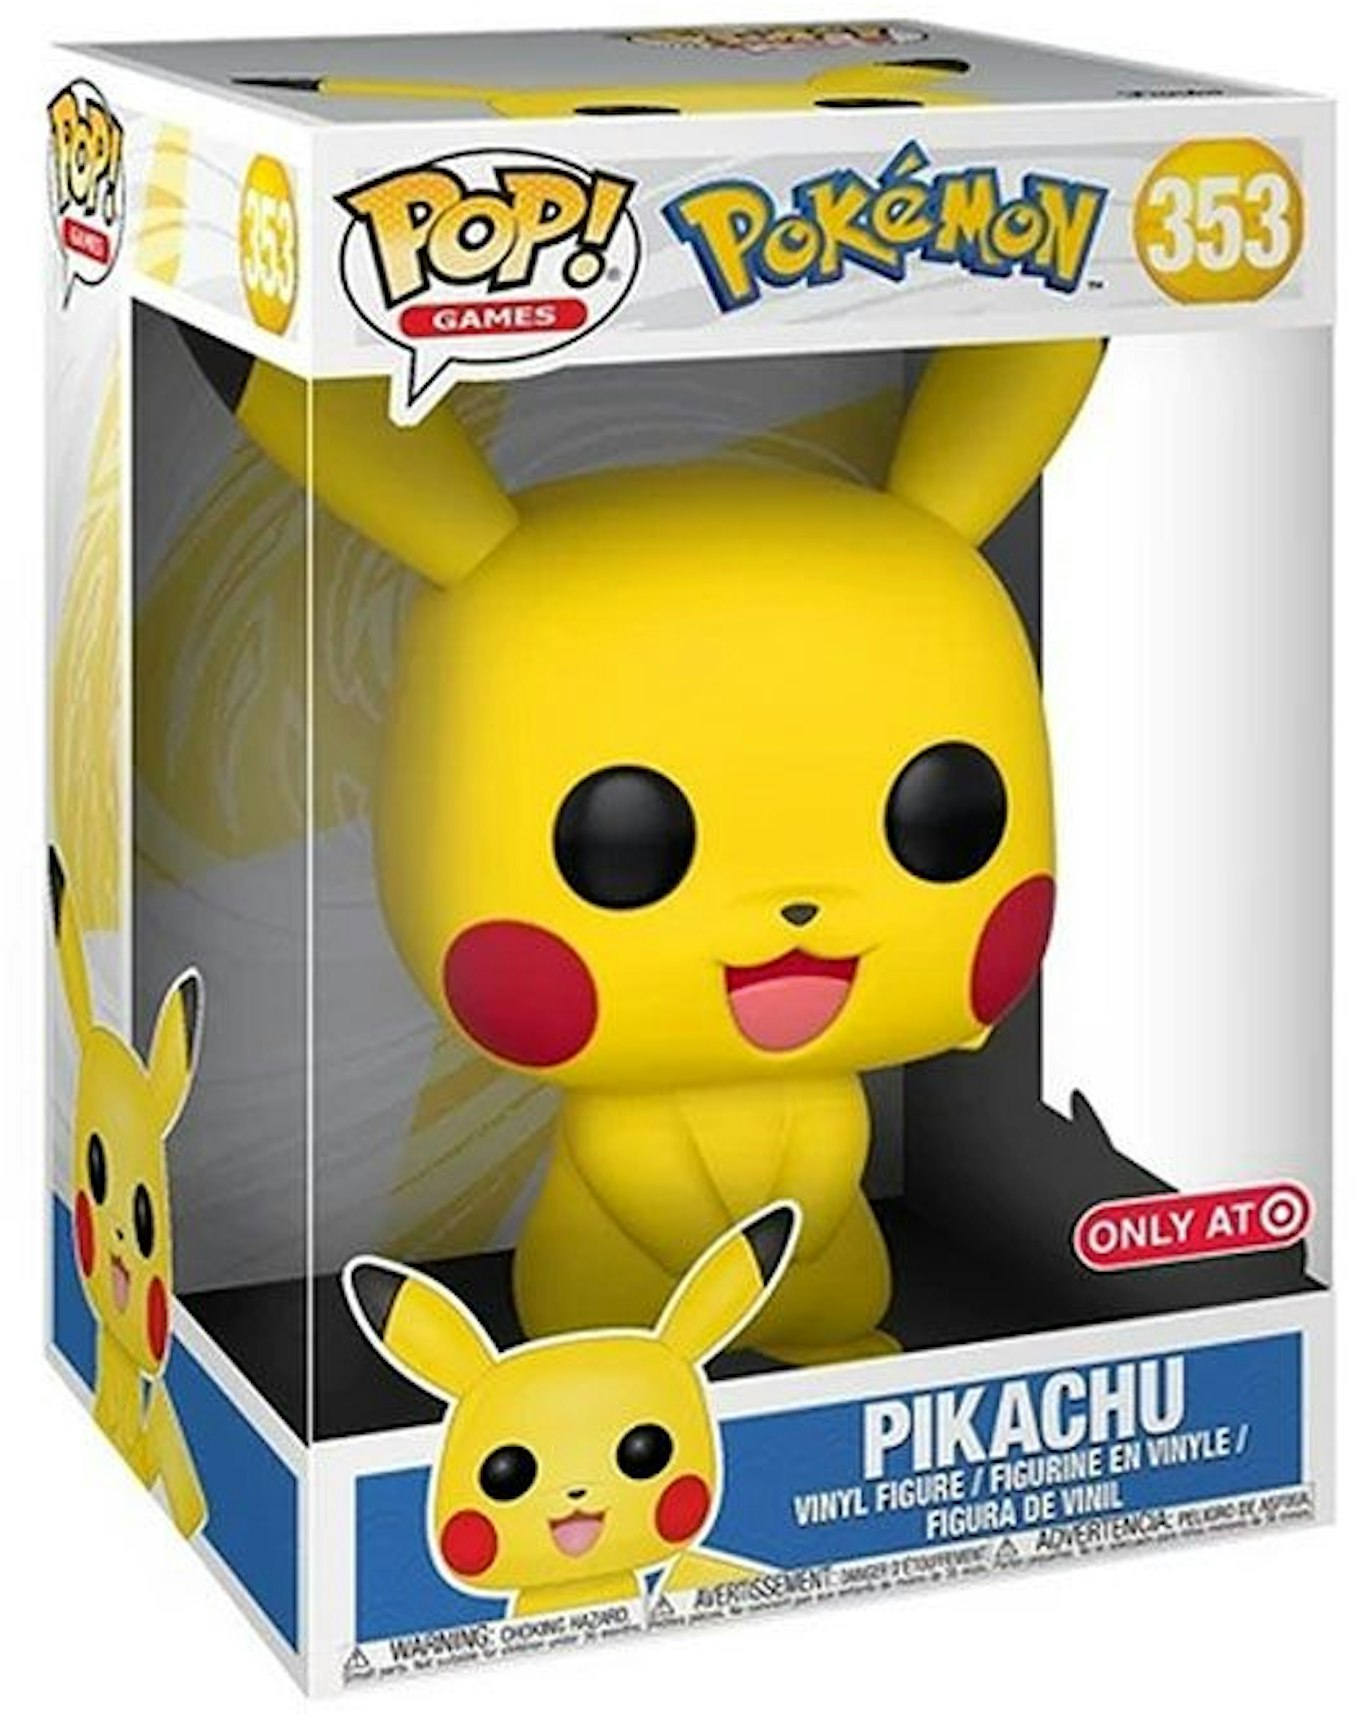 Pop! Games Pokemon Pikachu 10 inch Target Exclusive Figure #353 US